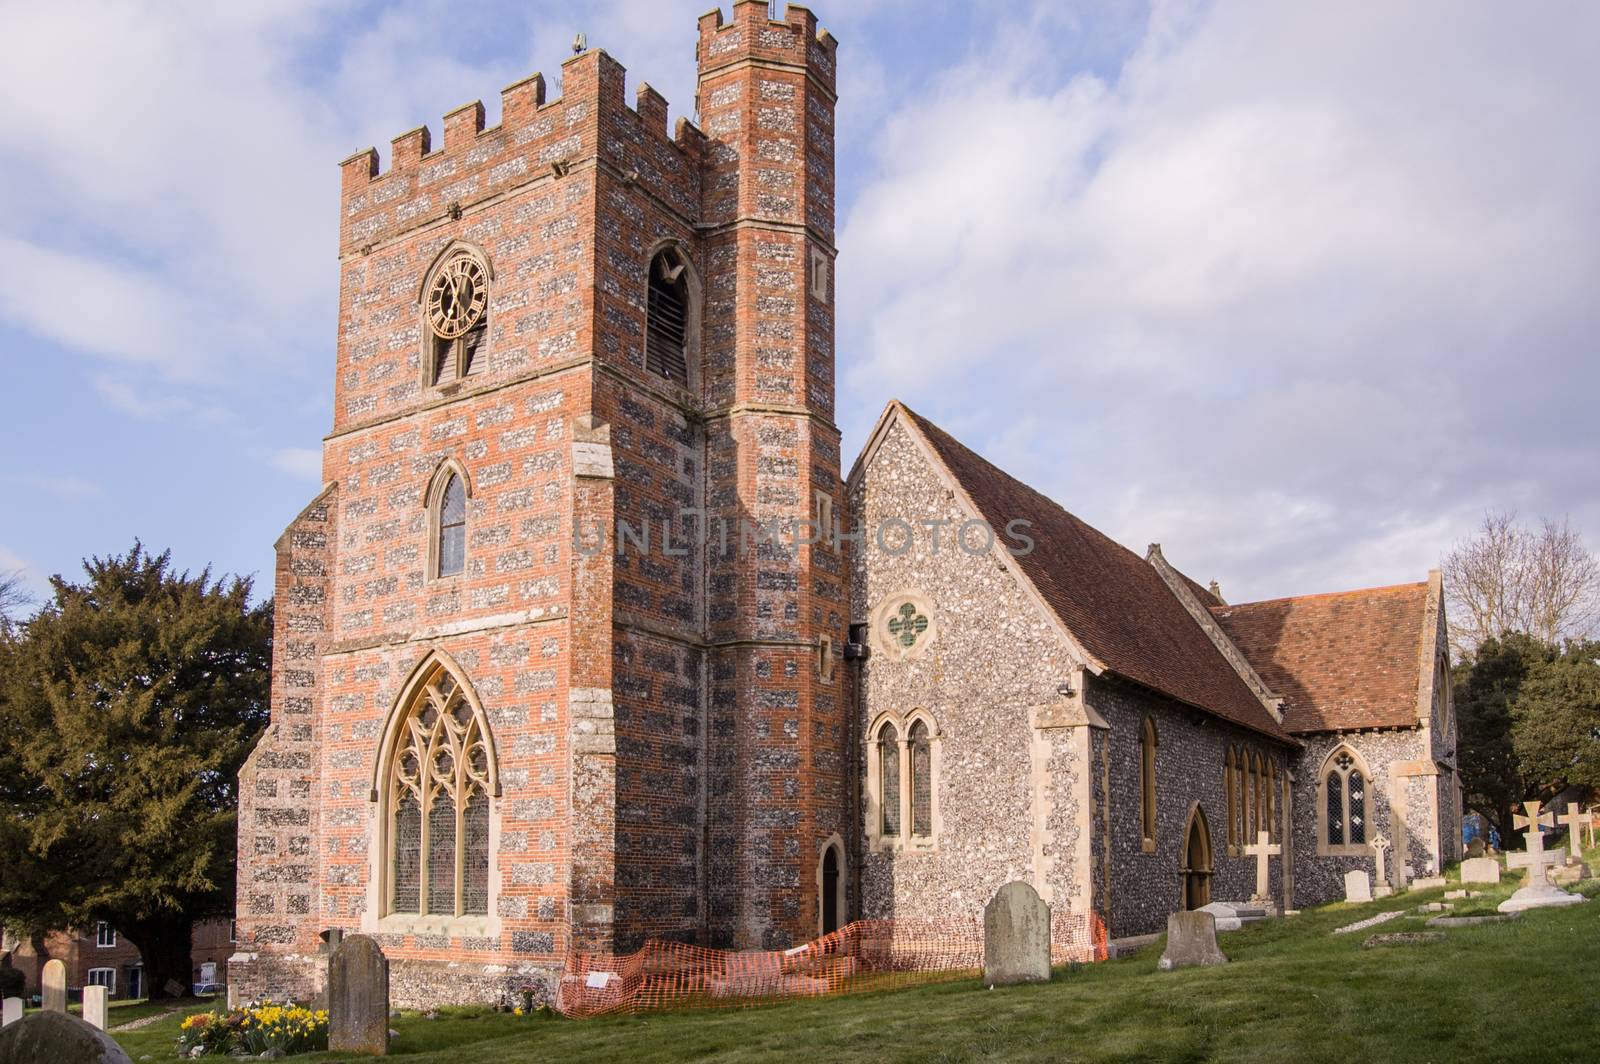 St Andrew's Church, Bradfield, Berkshire by BasPhoto